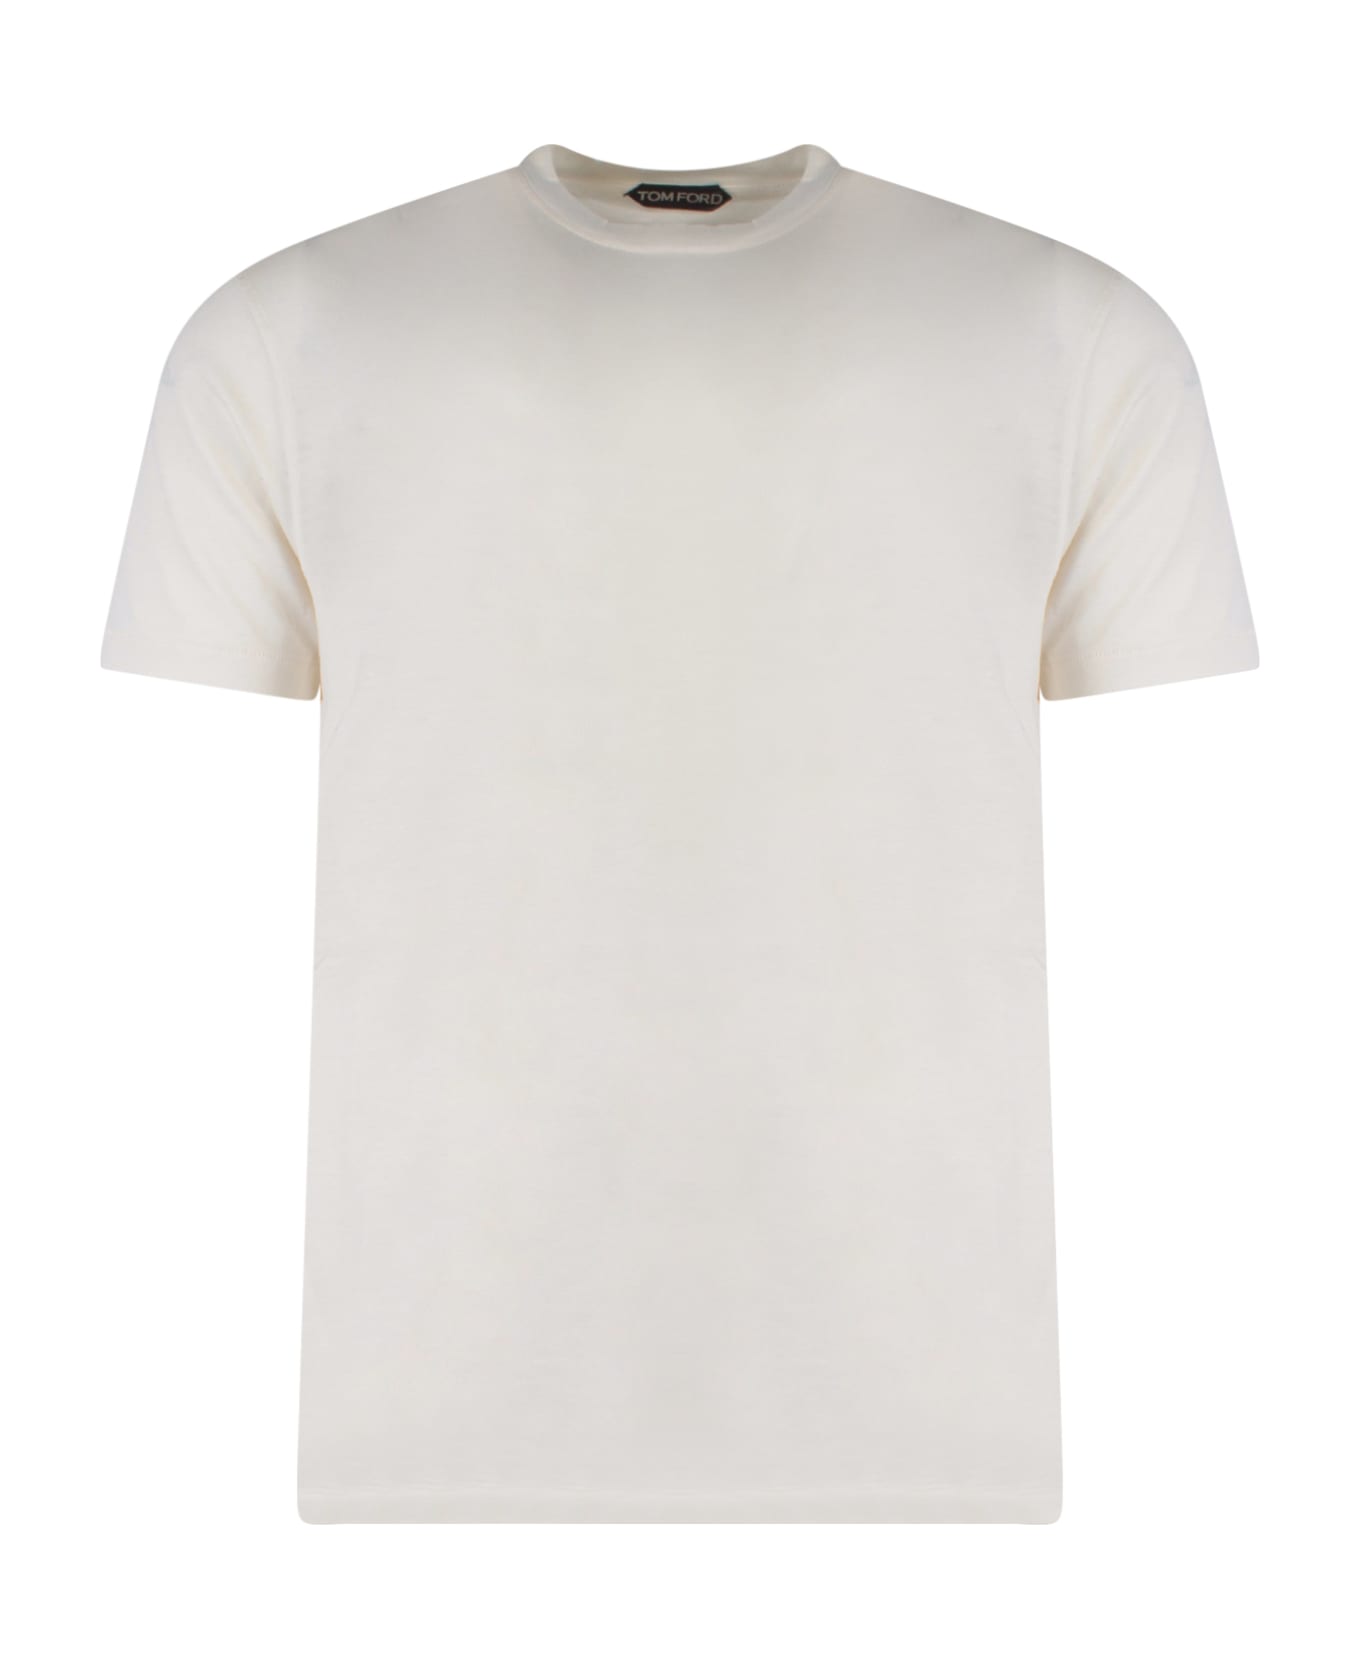 Tom Ford T-shirt - Ecru